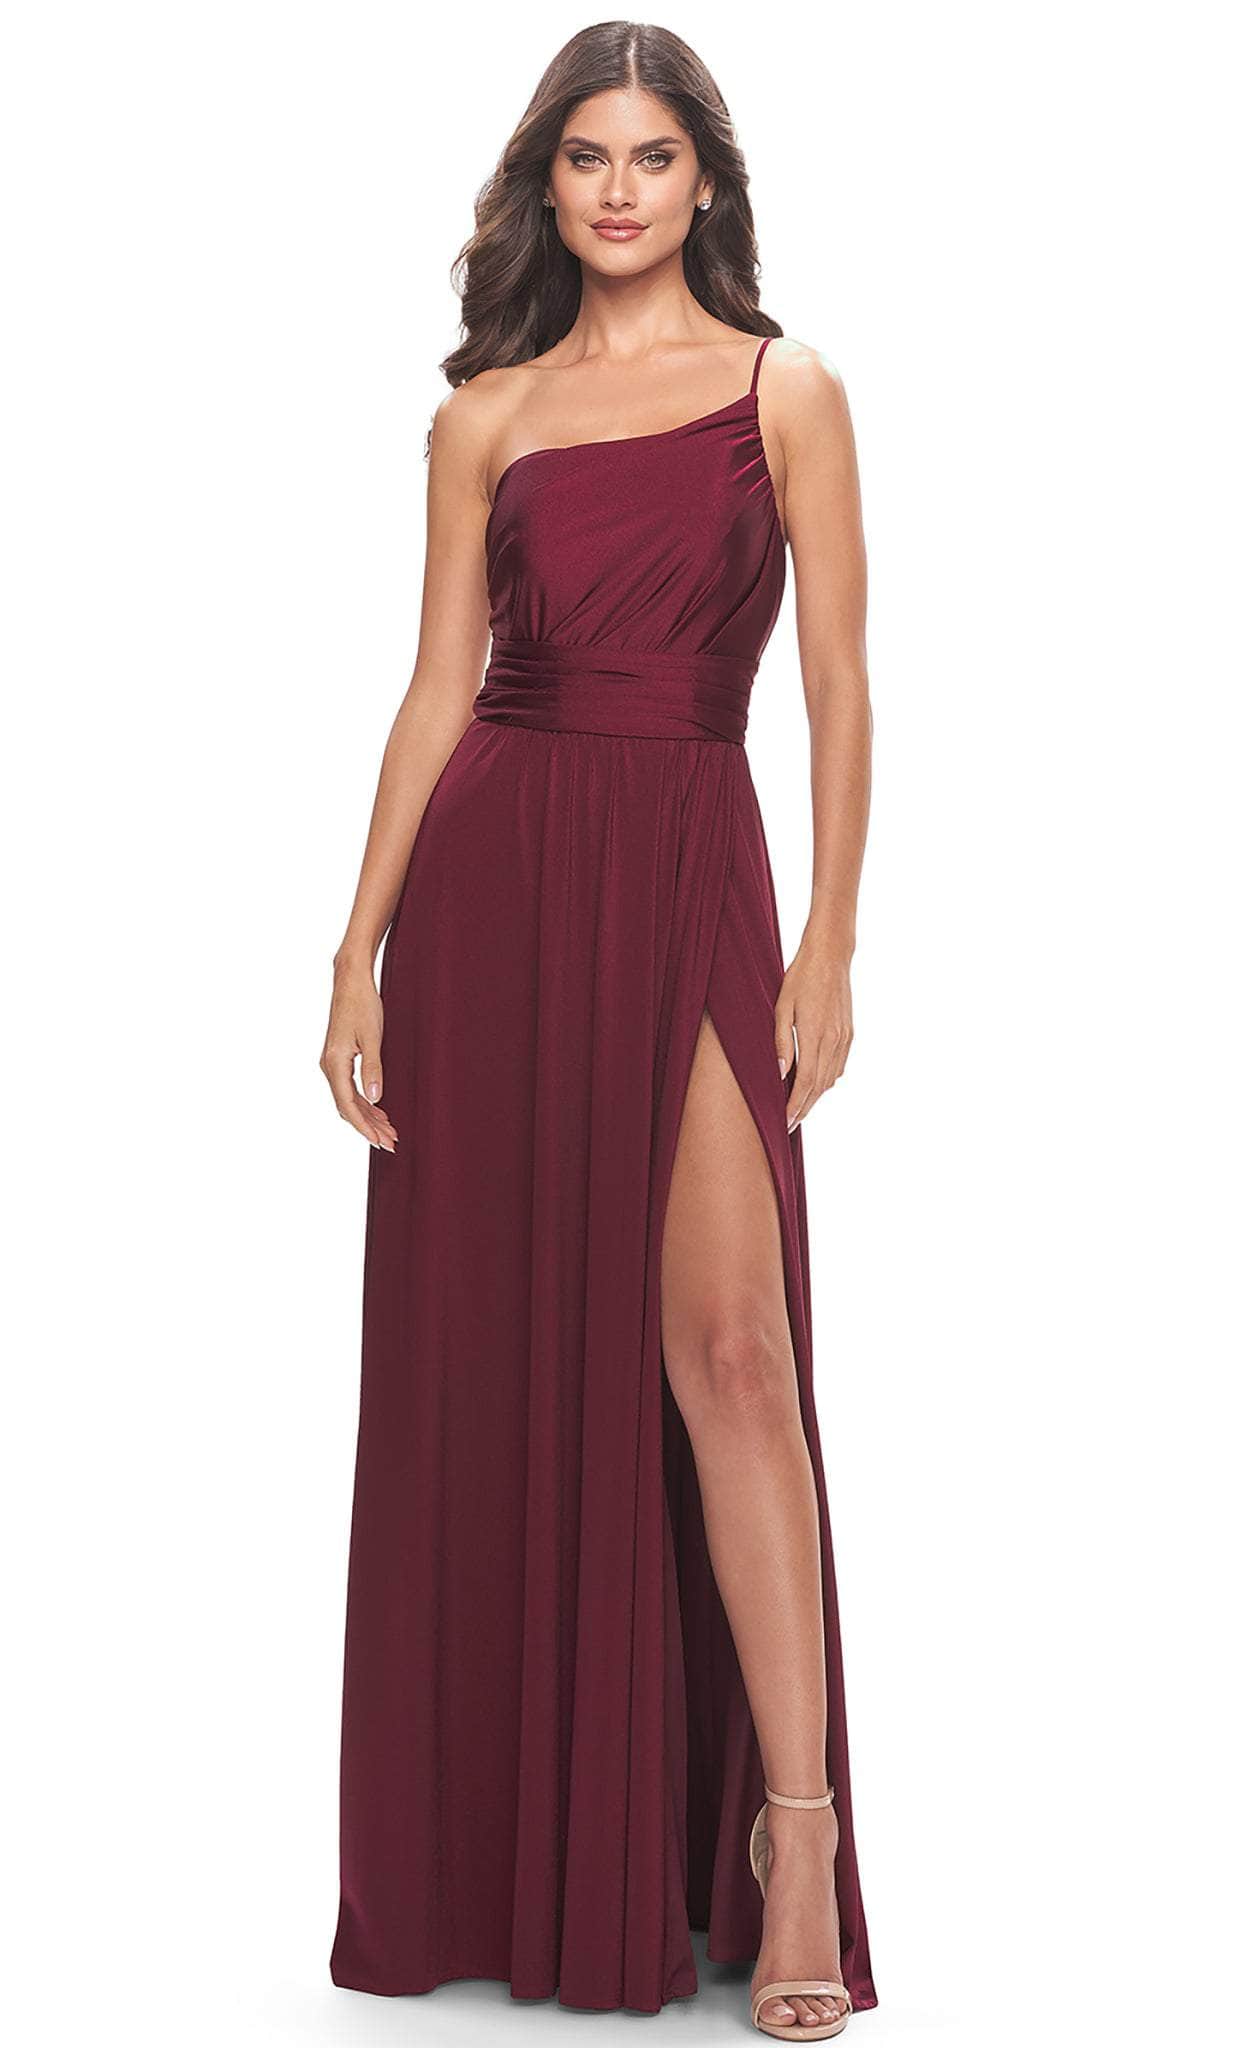 Image of La Femme 31170 - One Shoulder Classic Prom Dress with Slit